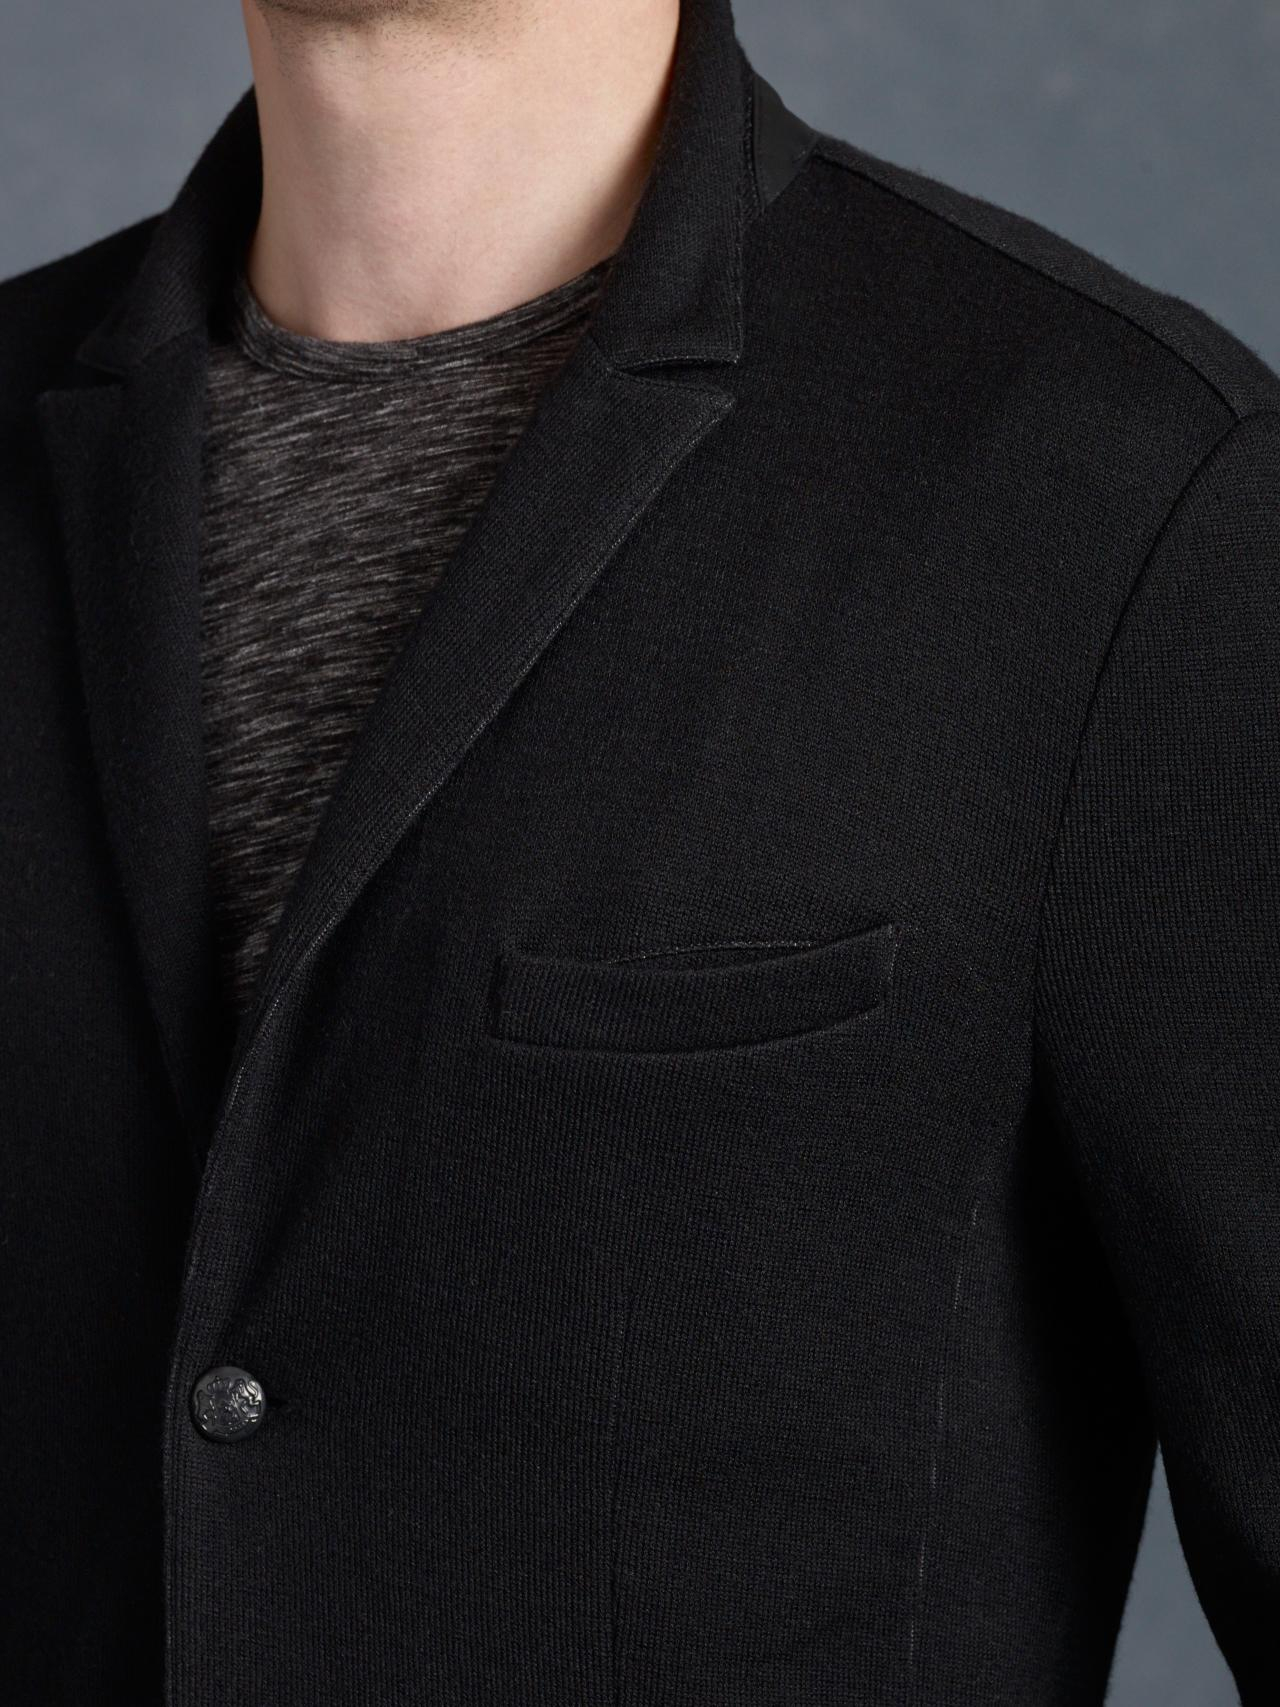 John Varvatos Peak Lapel Knit Jacket in Black for Men - Lyst